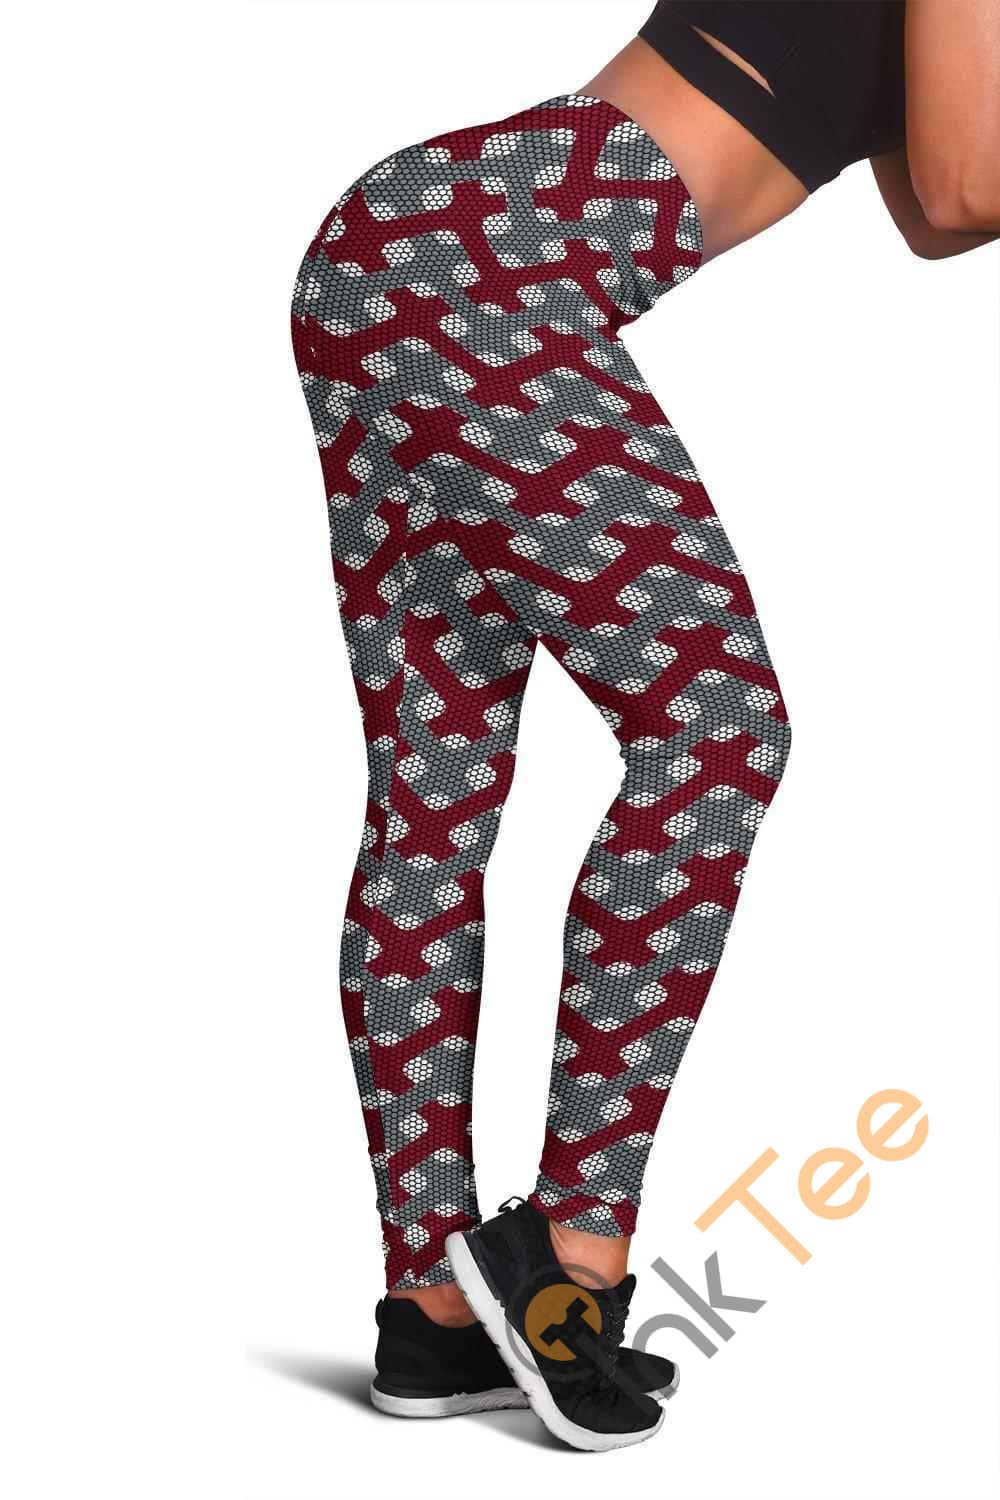 Inktee Store - Alabama Crimson Tide Inspired 3D All Over Print For Yoga Fitness Fashion Women'S Leggings Image